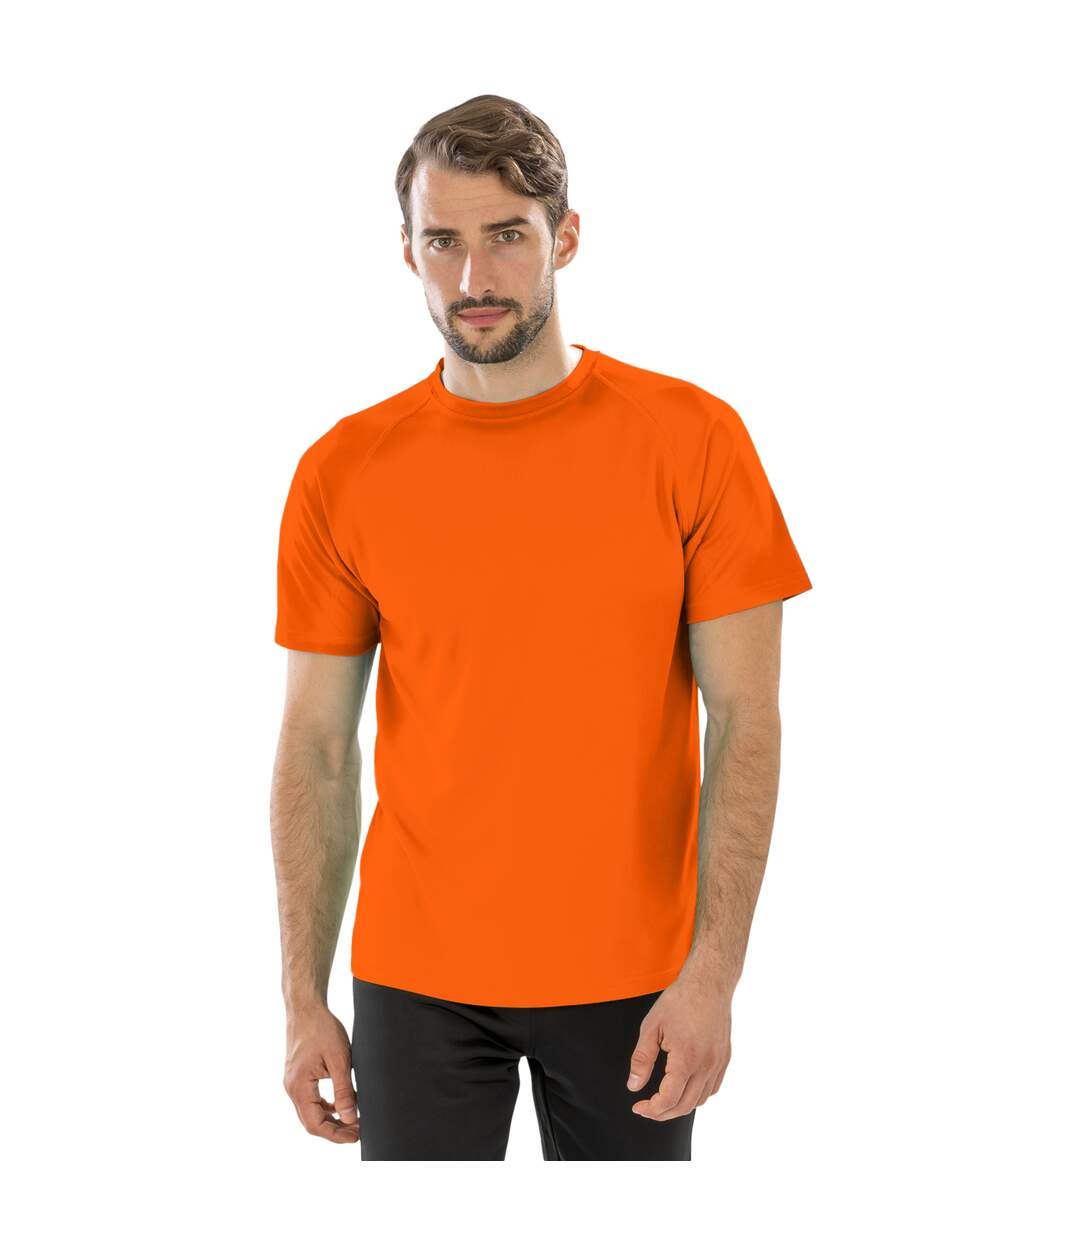 Spiro - T-shirt Aircool - Homme (Orange vif) - UTPC3166